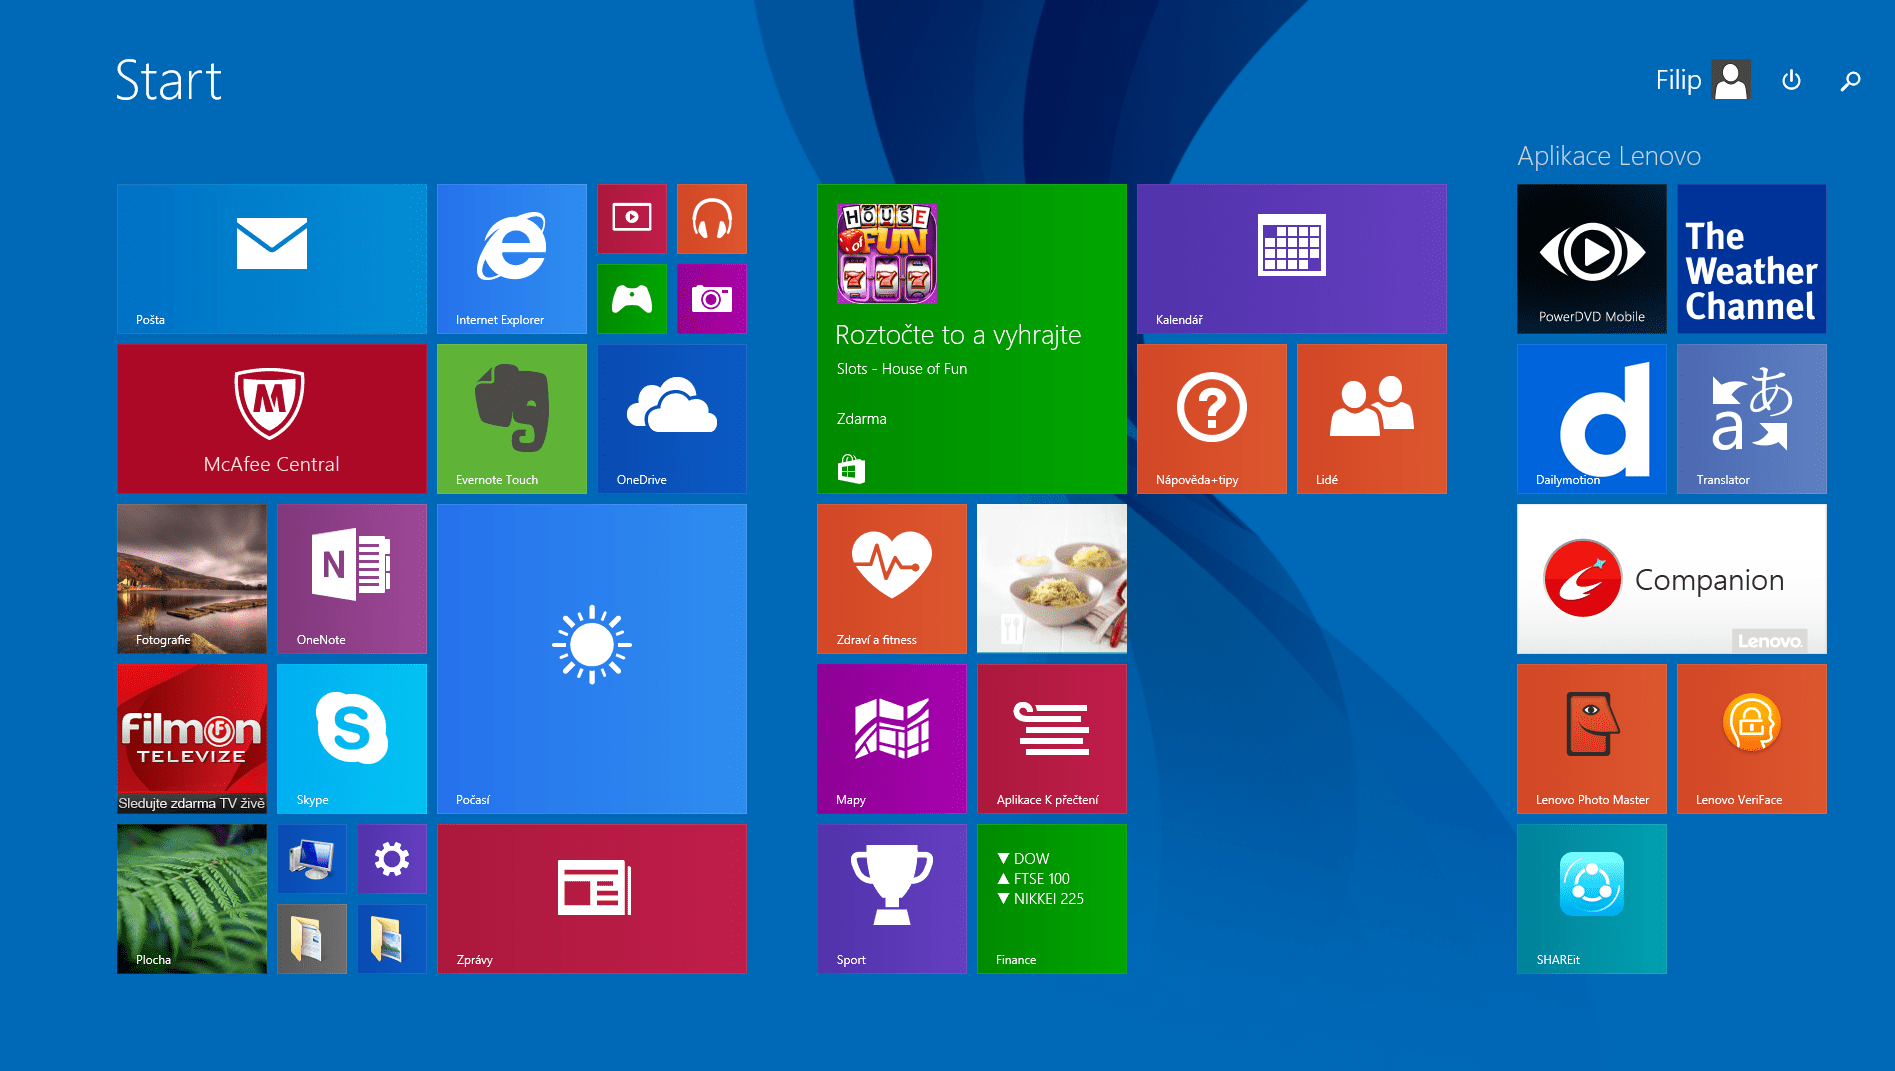 Windows 8.1 Metro